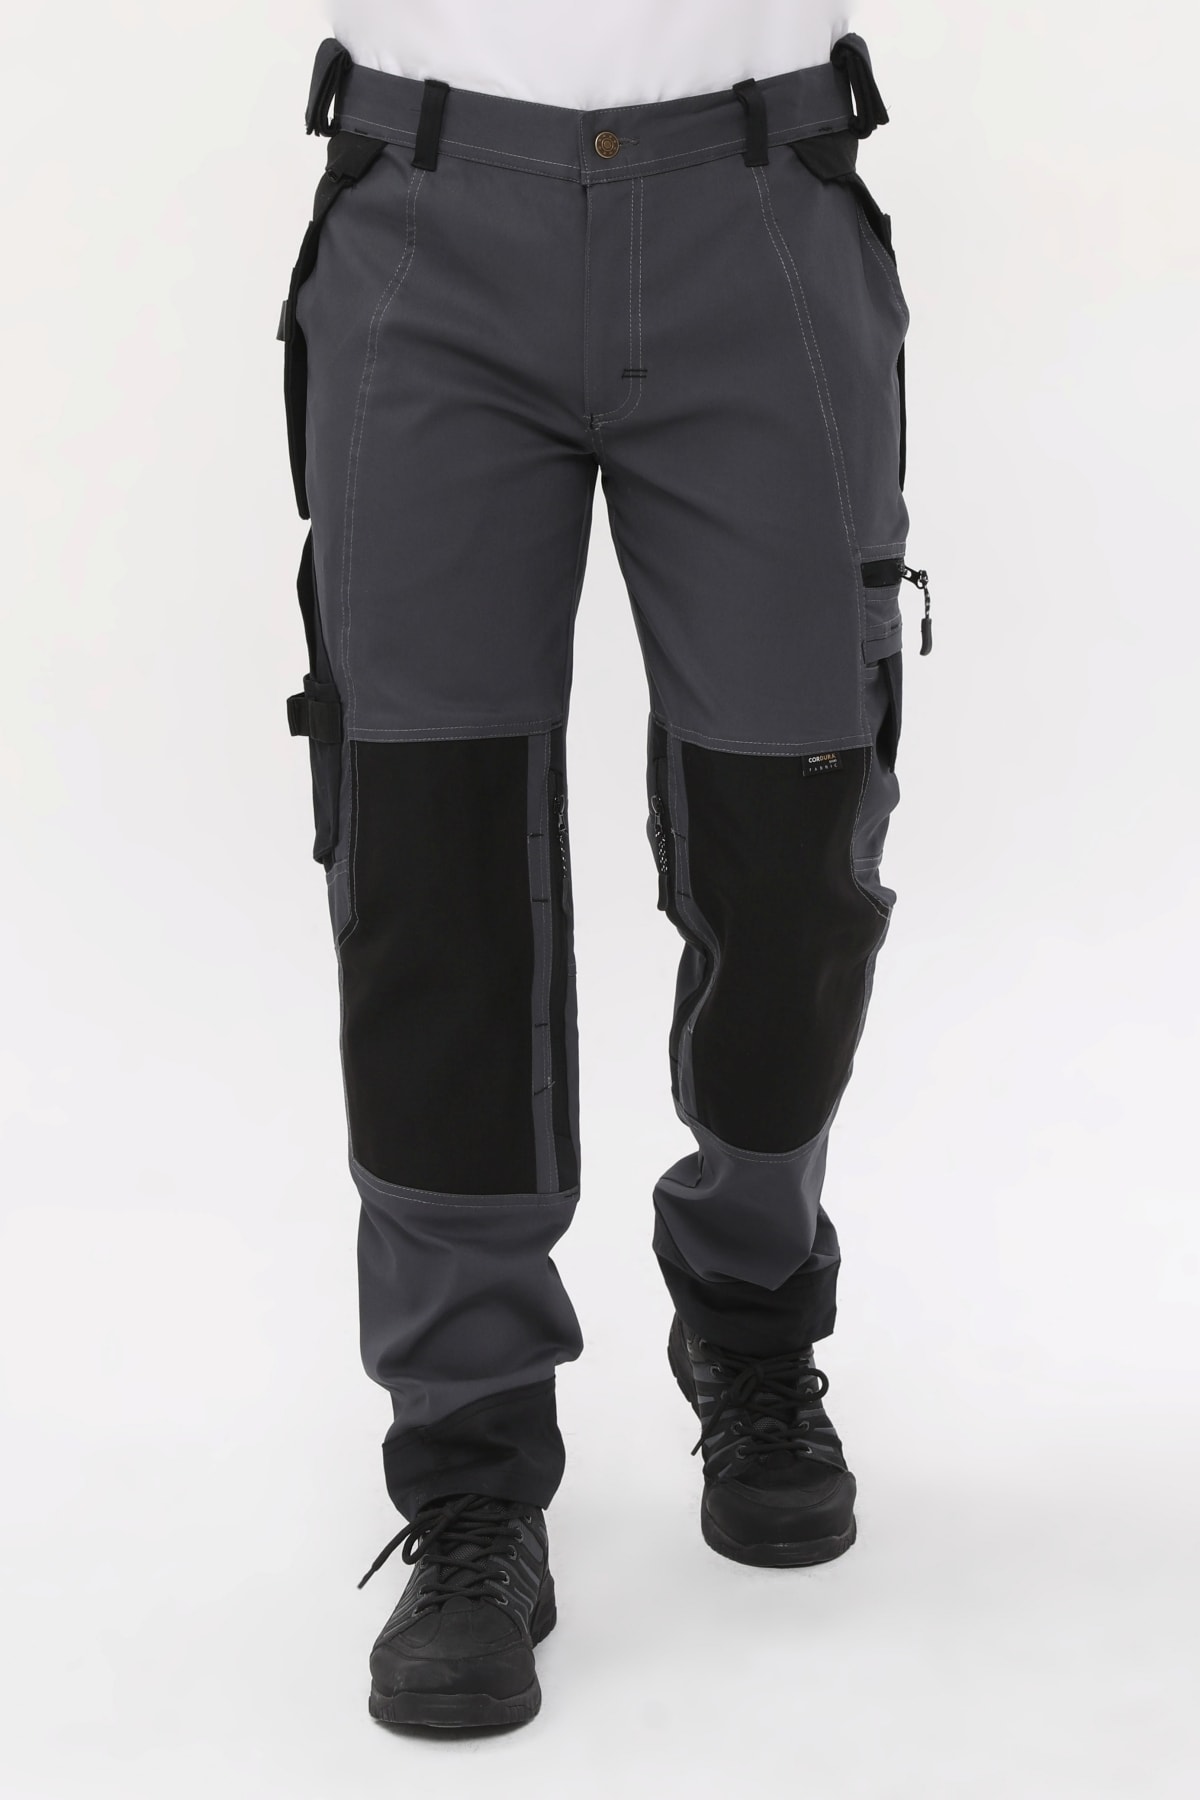 Uniprom Iş Pantolonu Likralı Manchester Model Füme-siyah